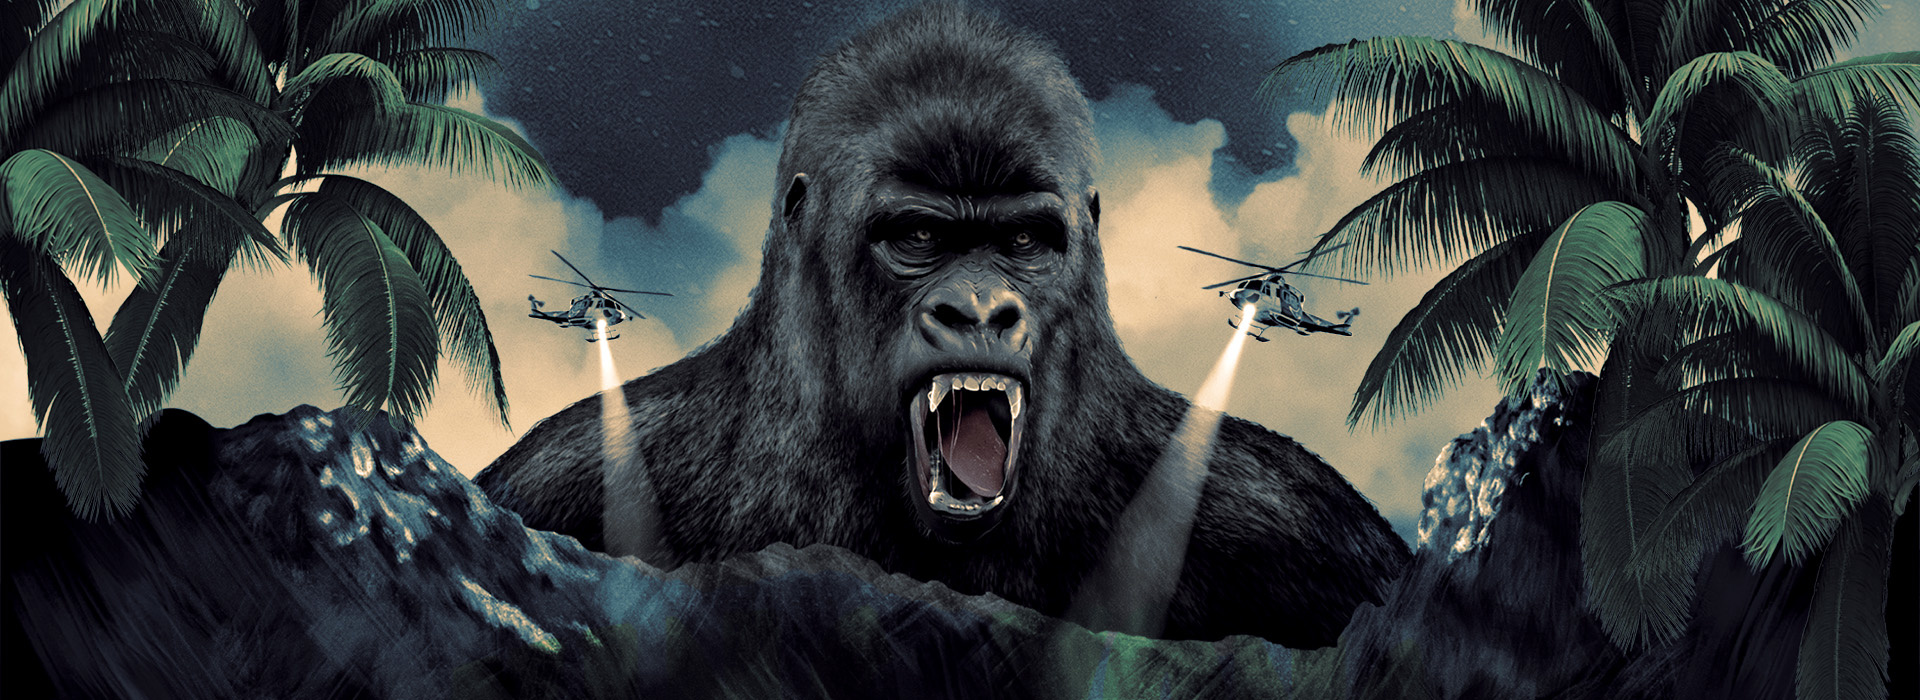 Movie poster King Kong